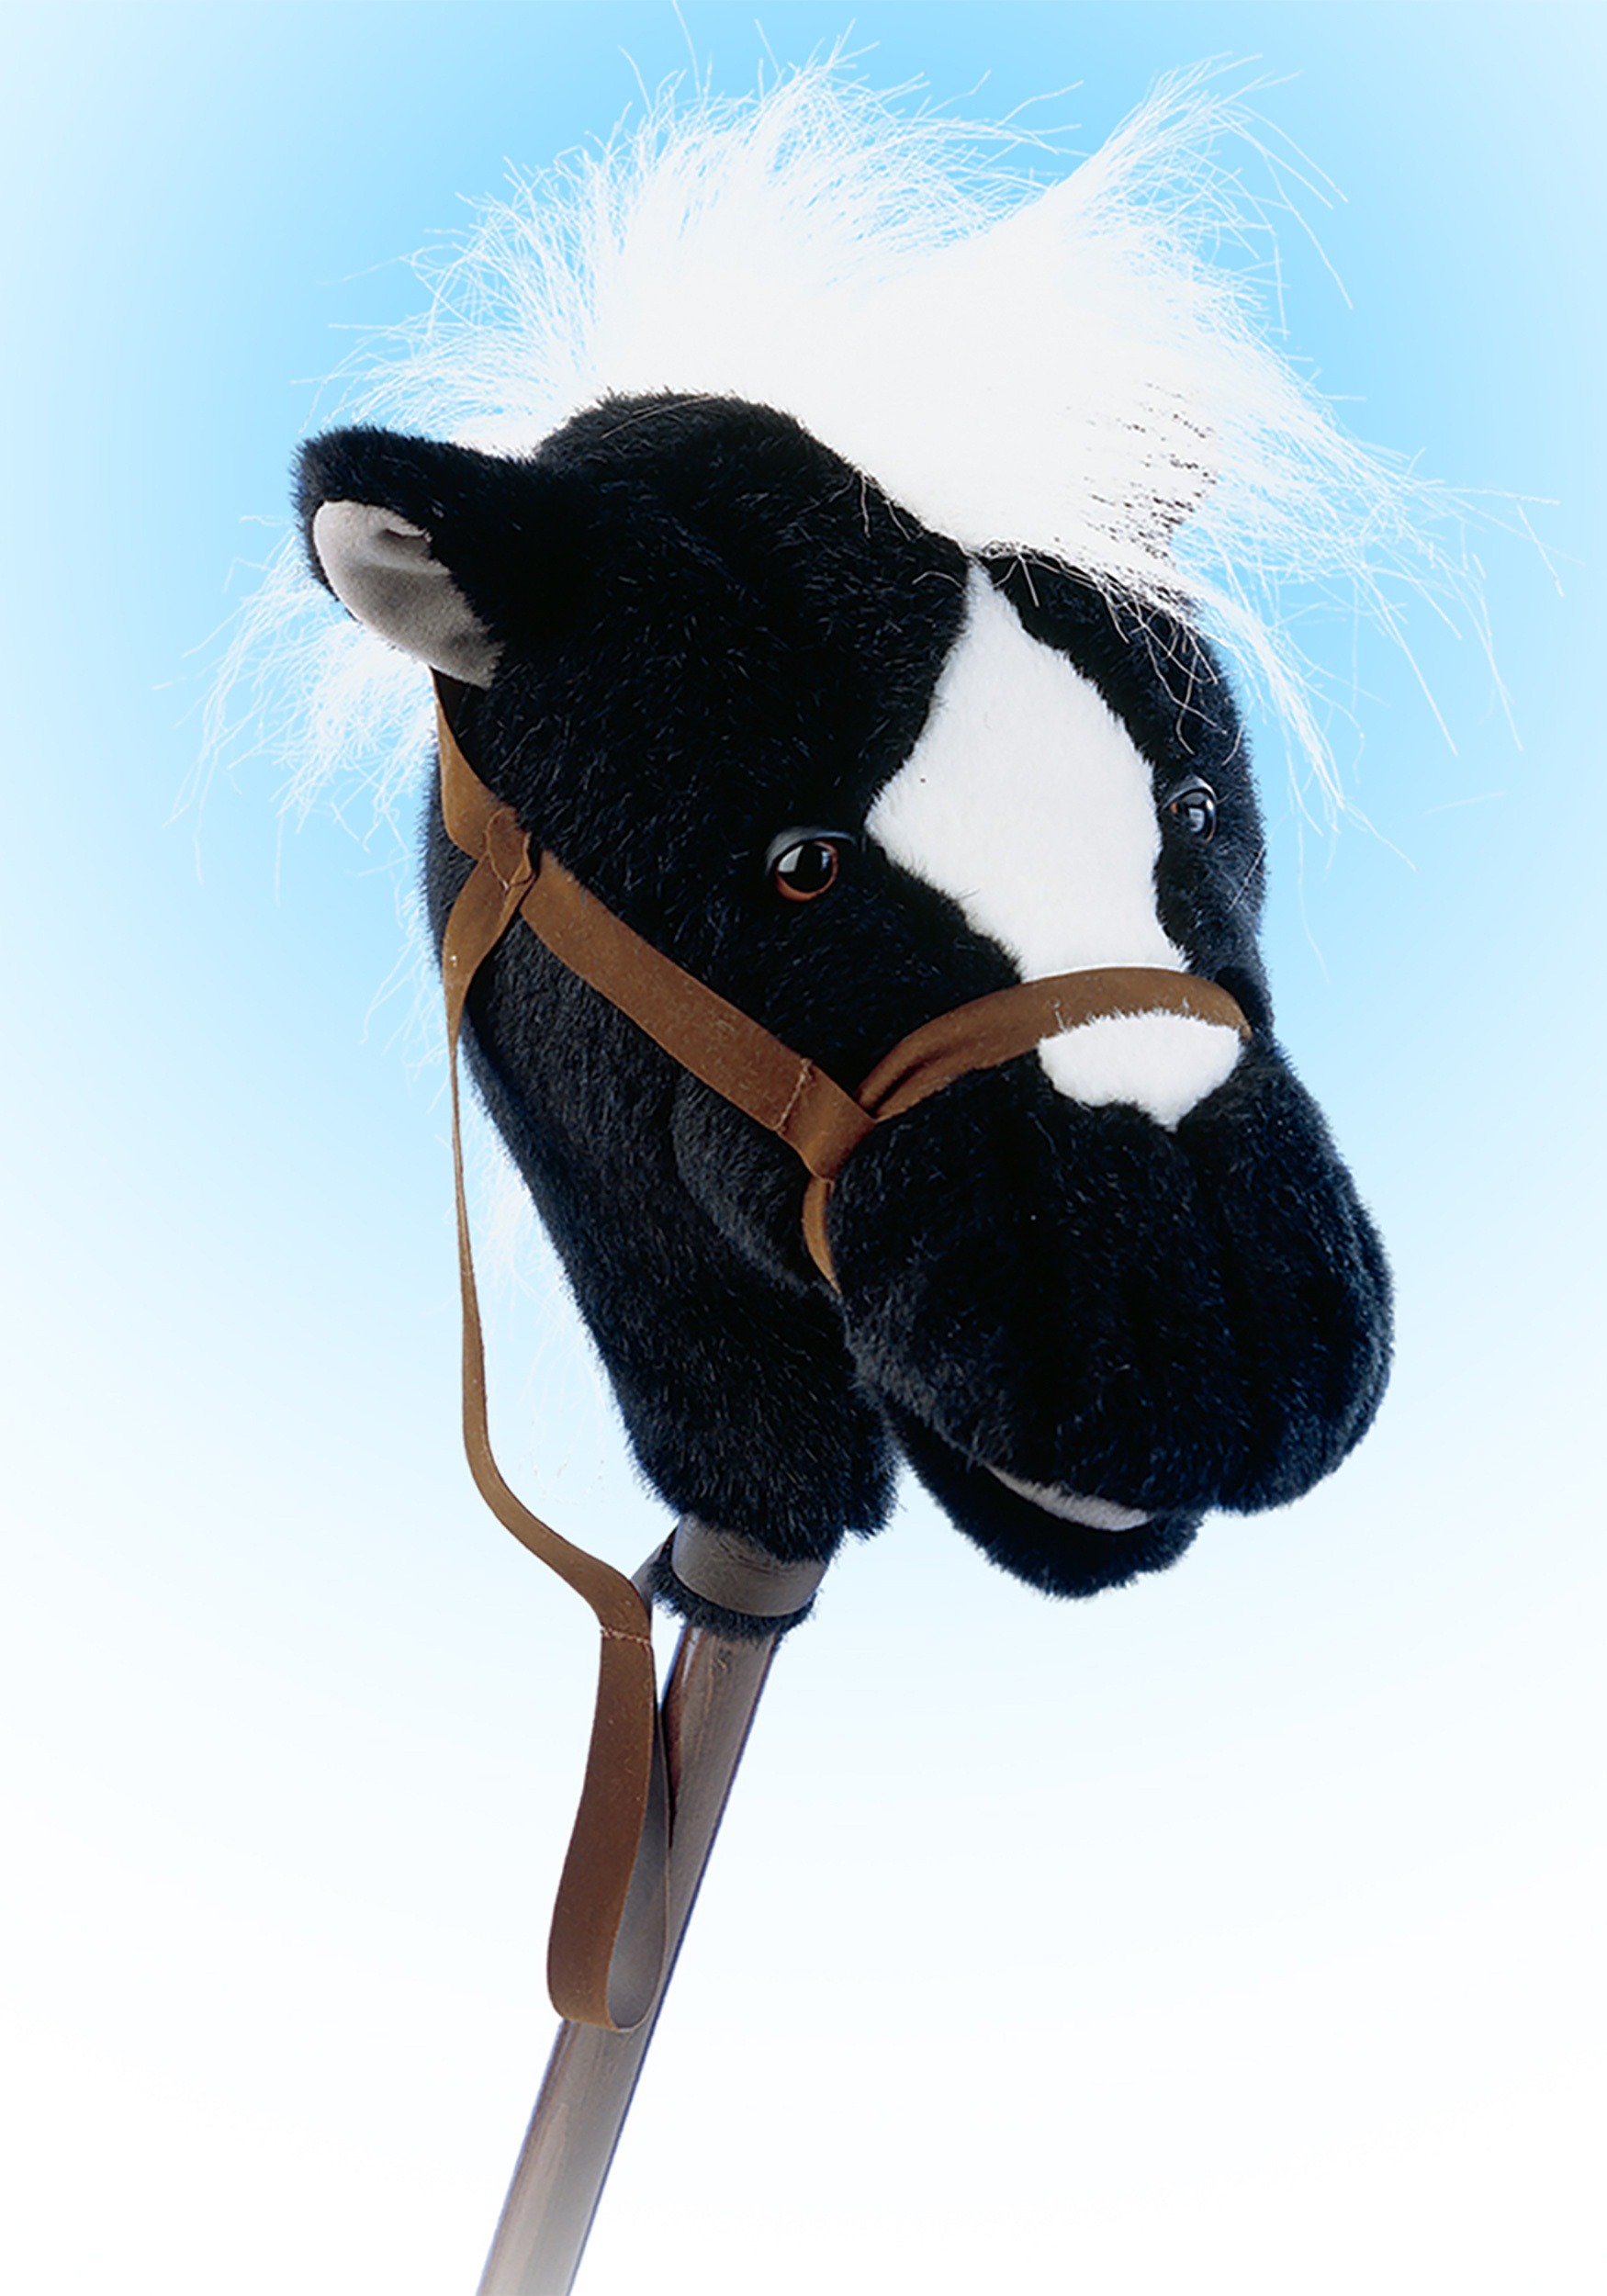 33″ Easy Ride ‘Em Black Horse on a Stick